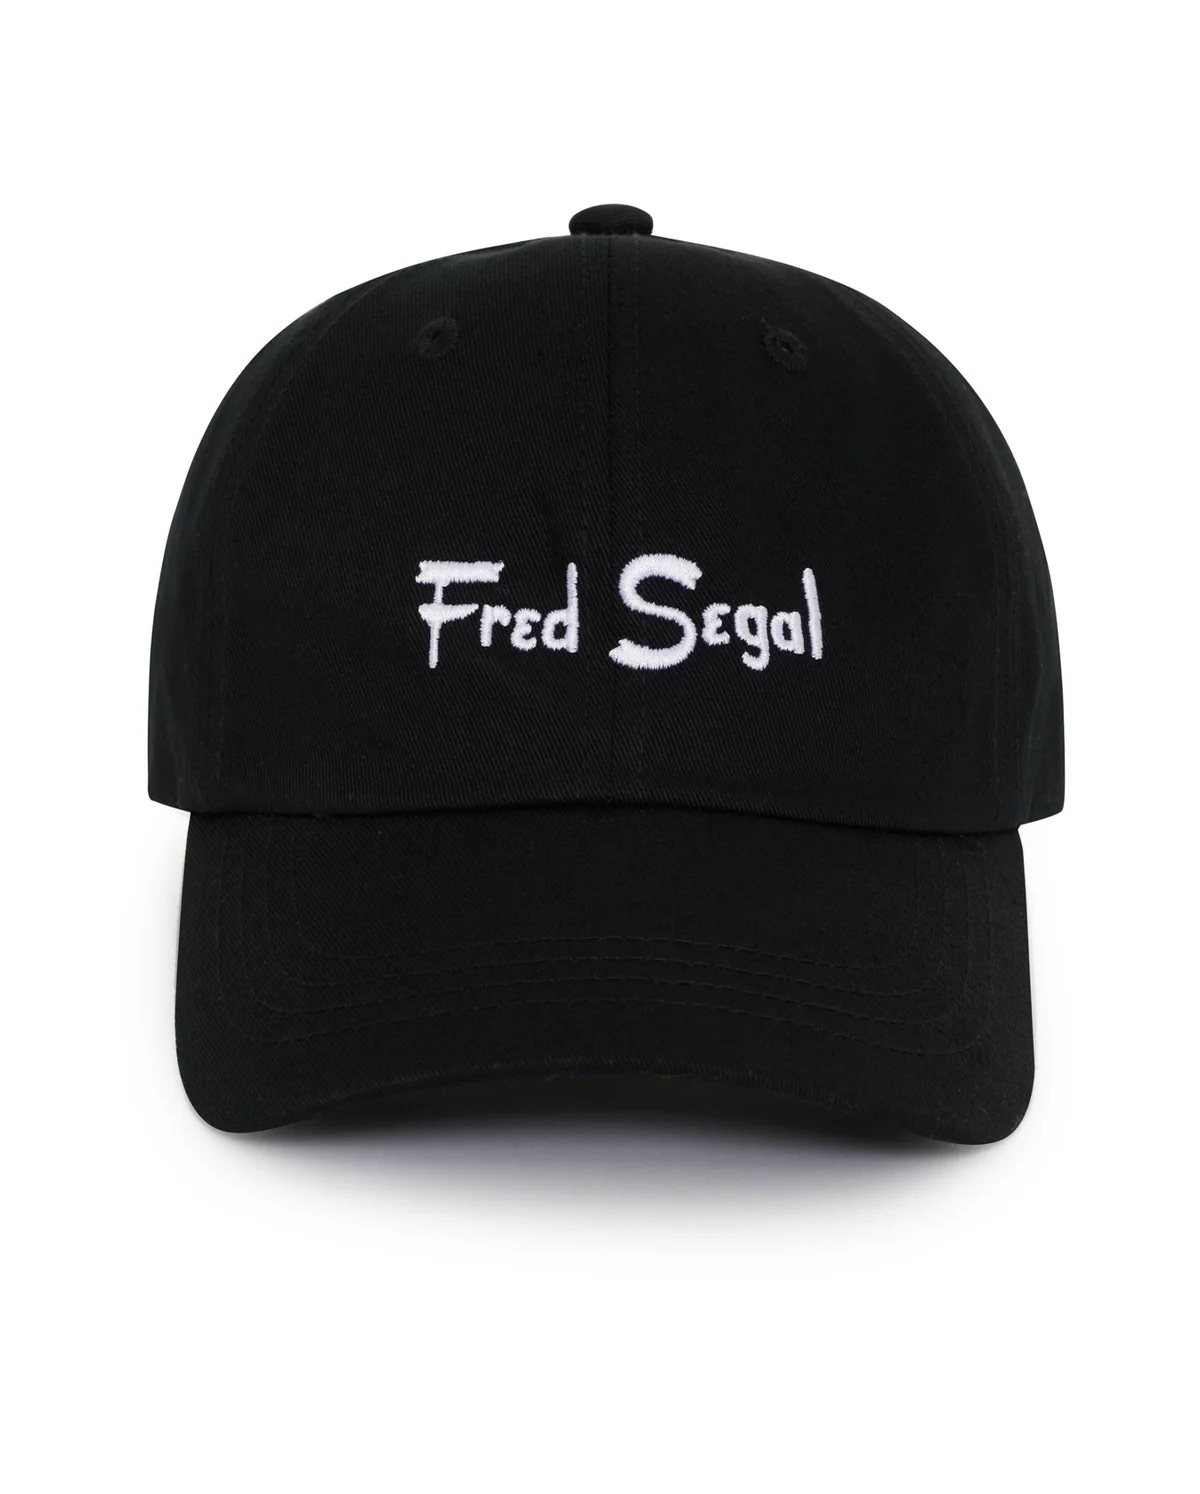 FRED SEGAL FS Logo Dad Hat – Black – $12 SALE